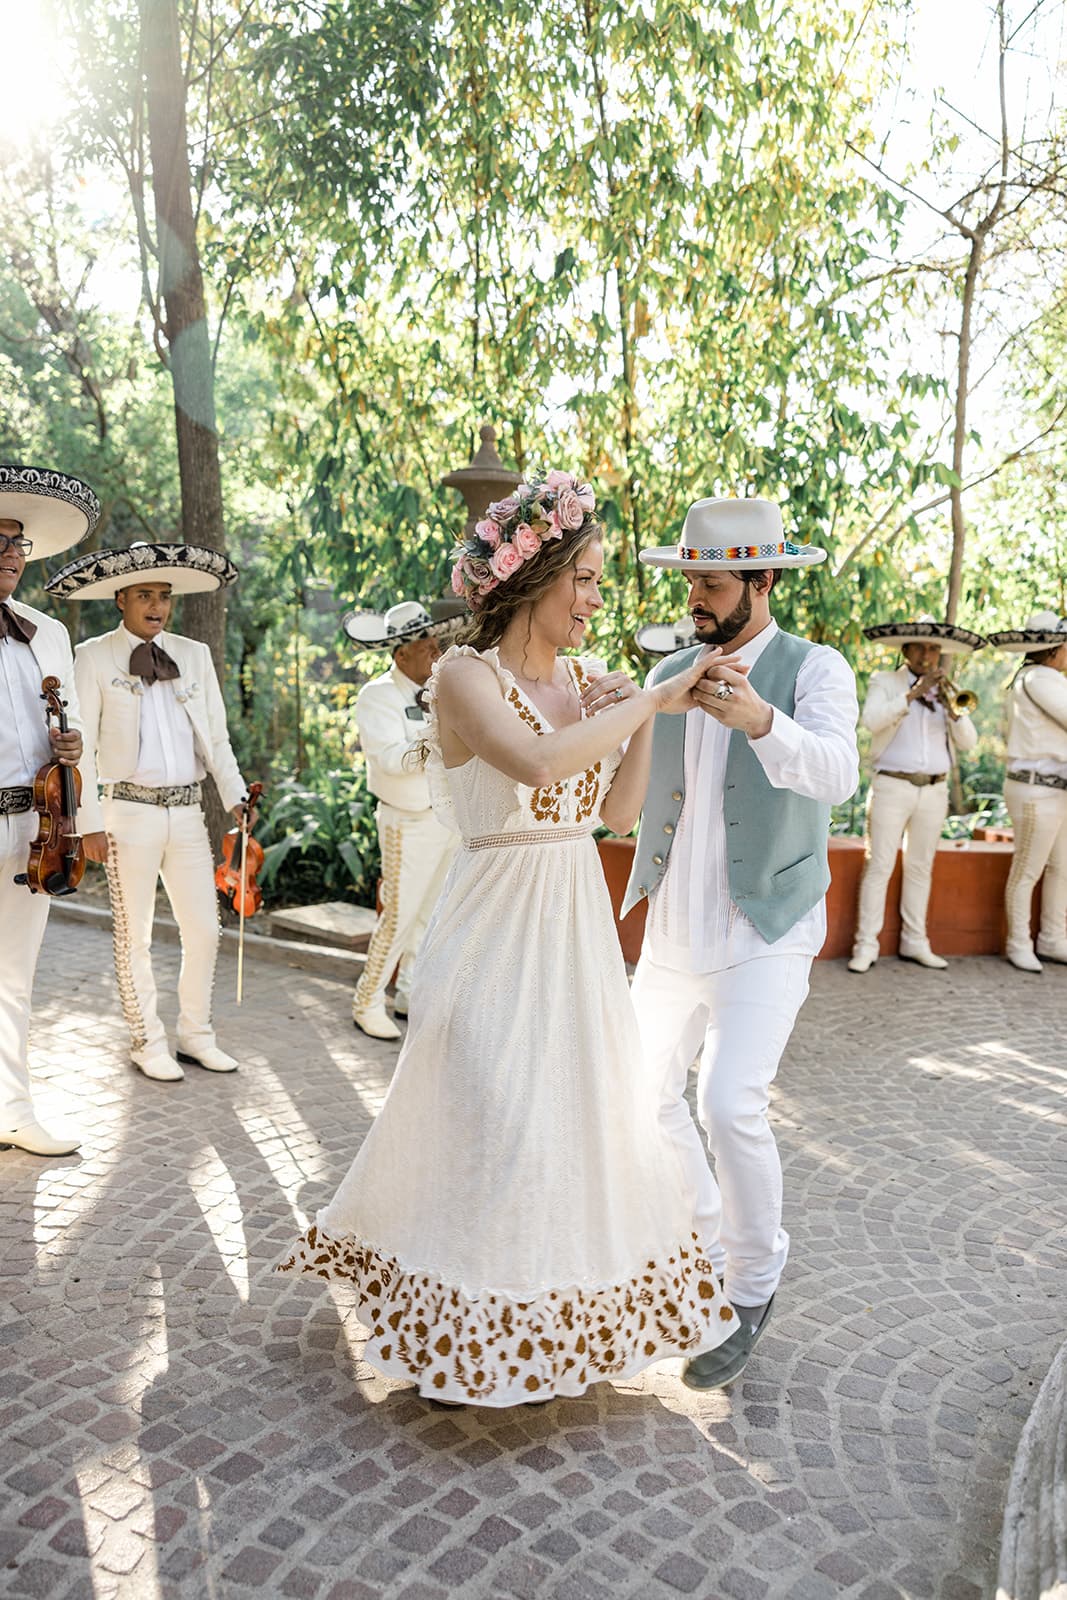 Bride and groom dance during traditional callejoneada in San Miguel de Allende